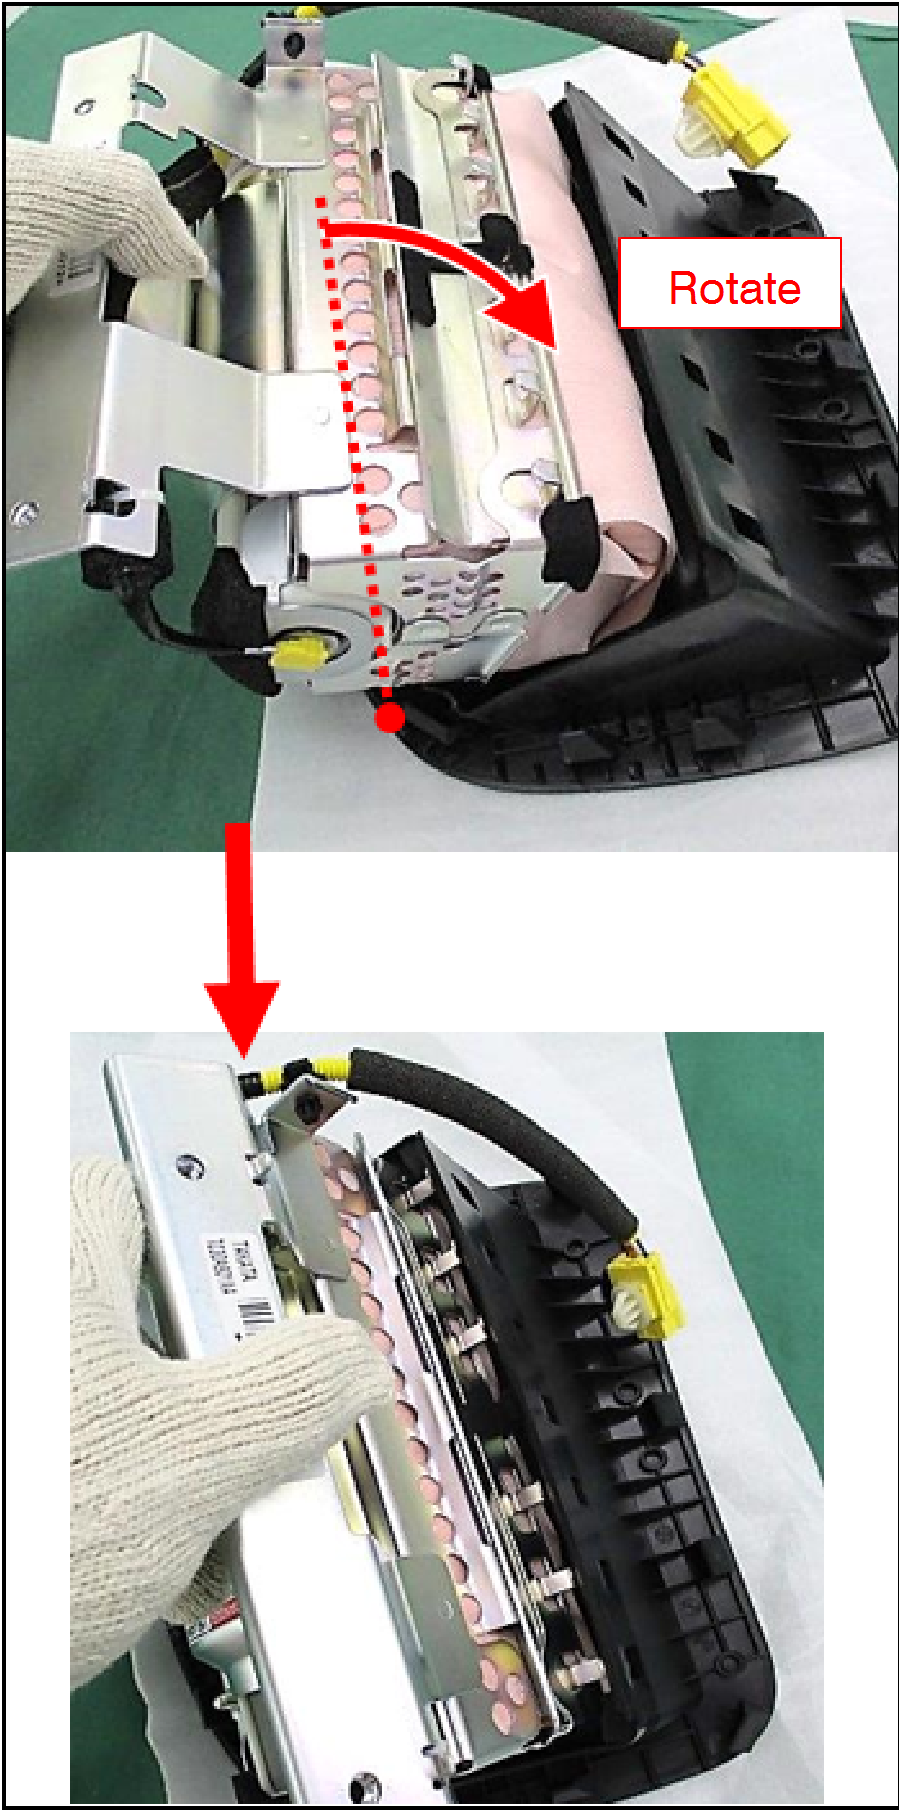 Rotate the air bag module toward the Back side